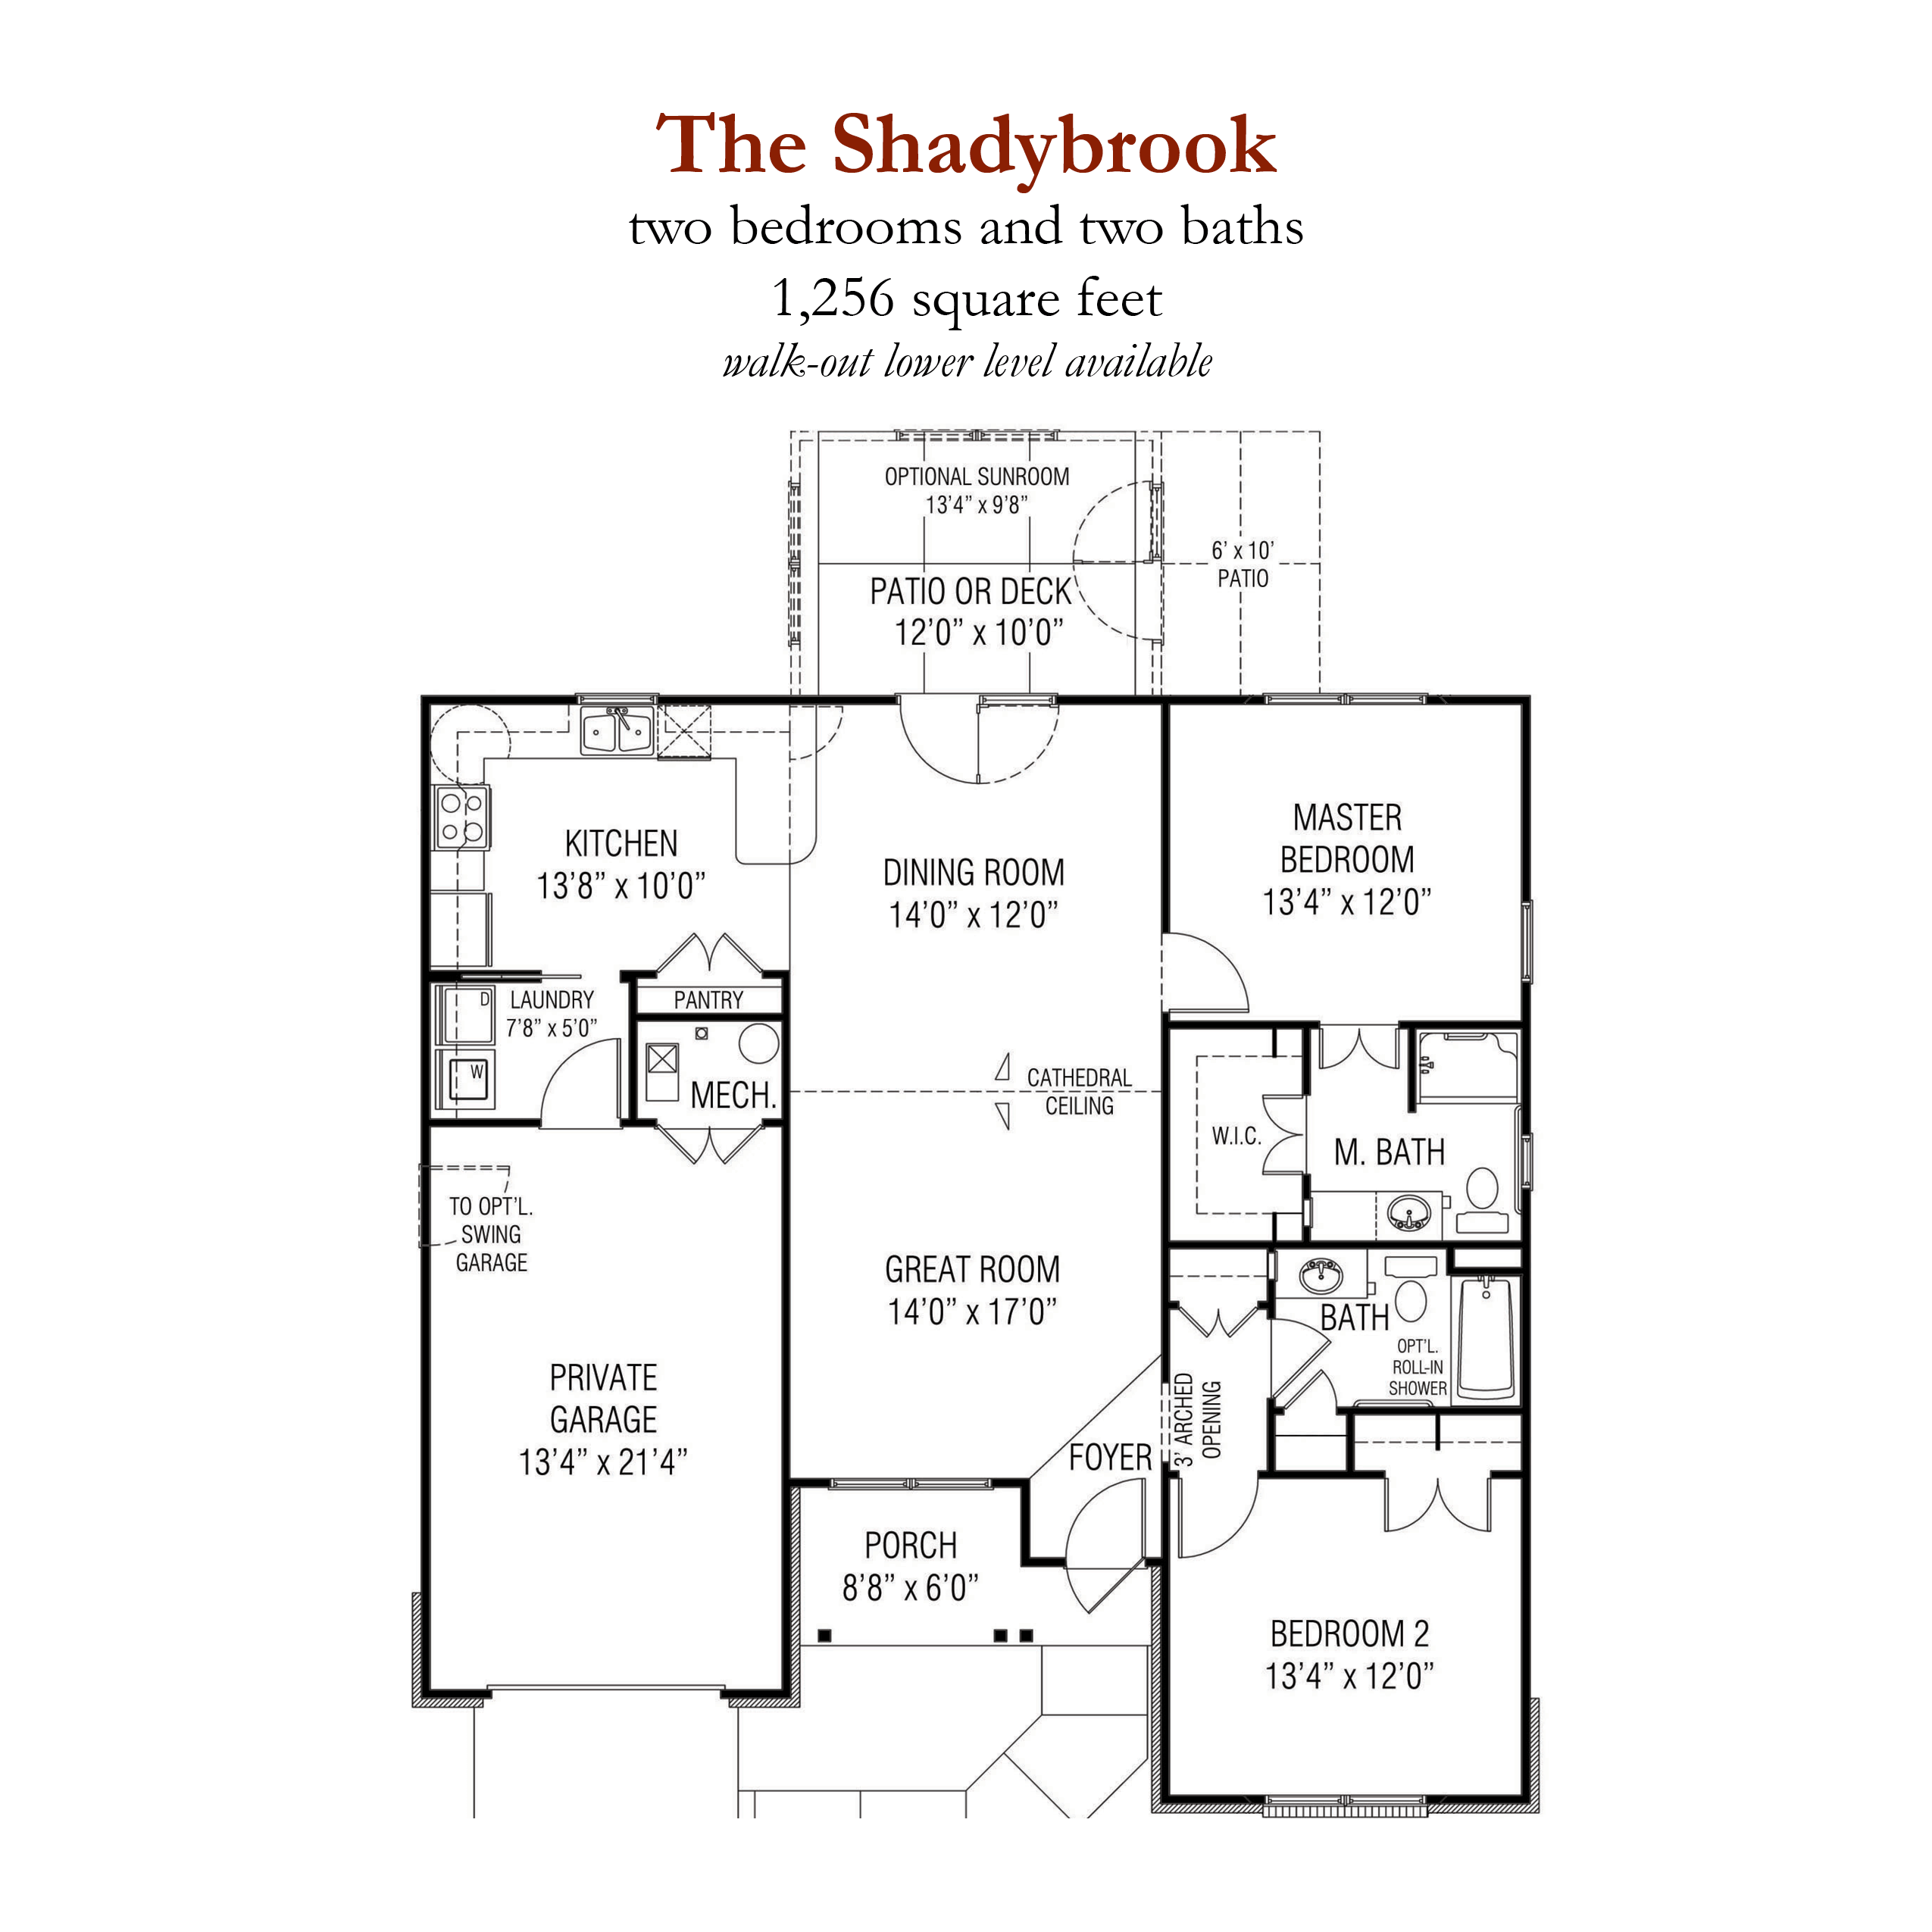 The Shadybrook senior living - 2 bedrooms and 2 bathrooms floor plan